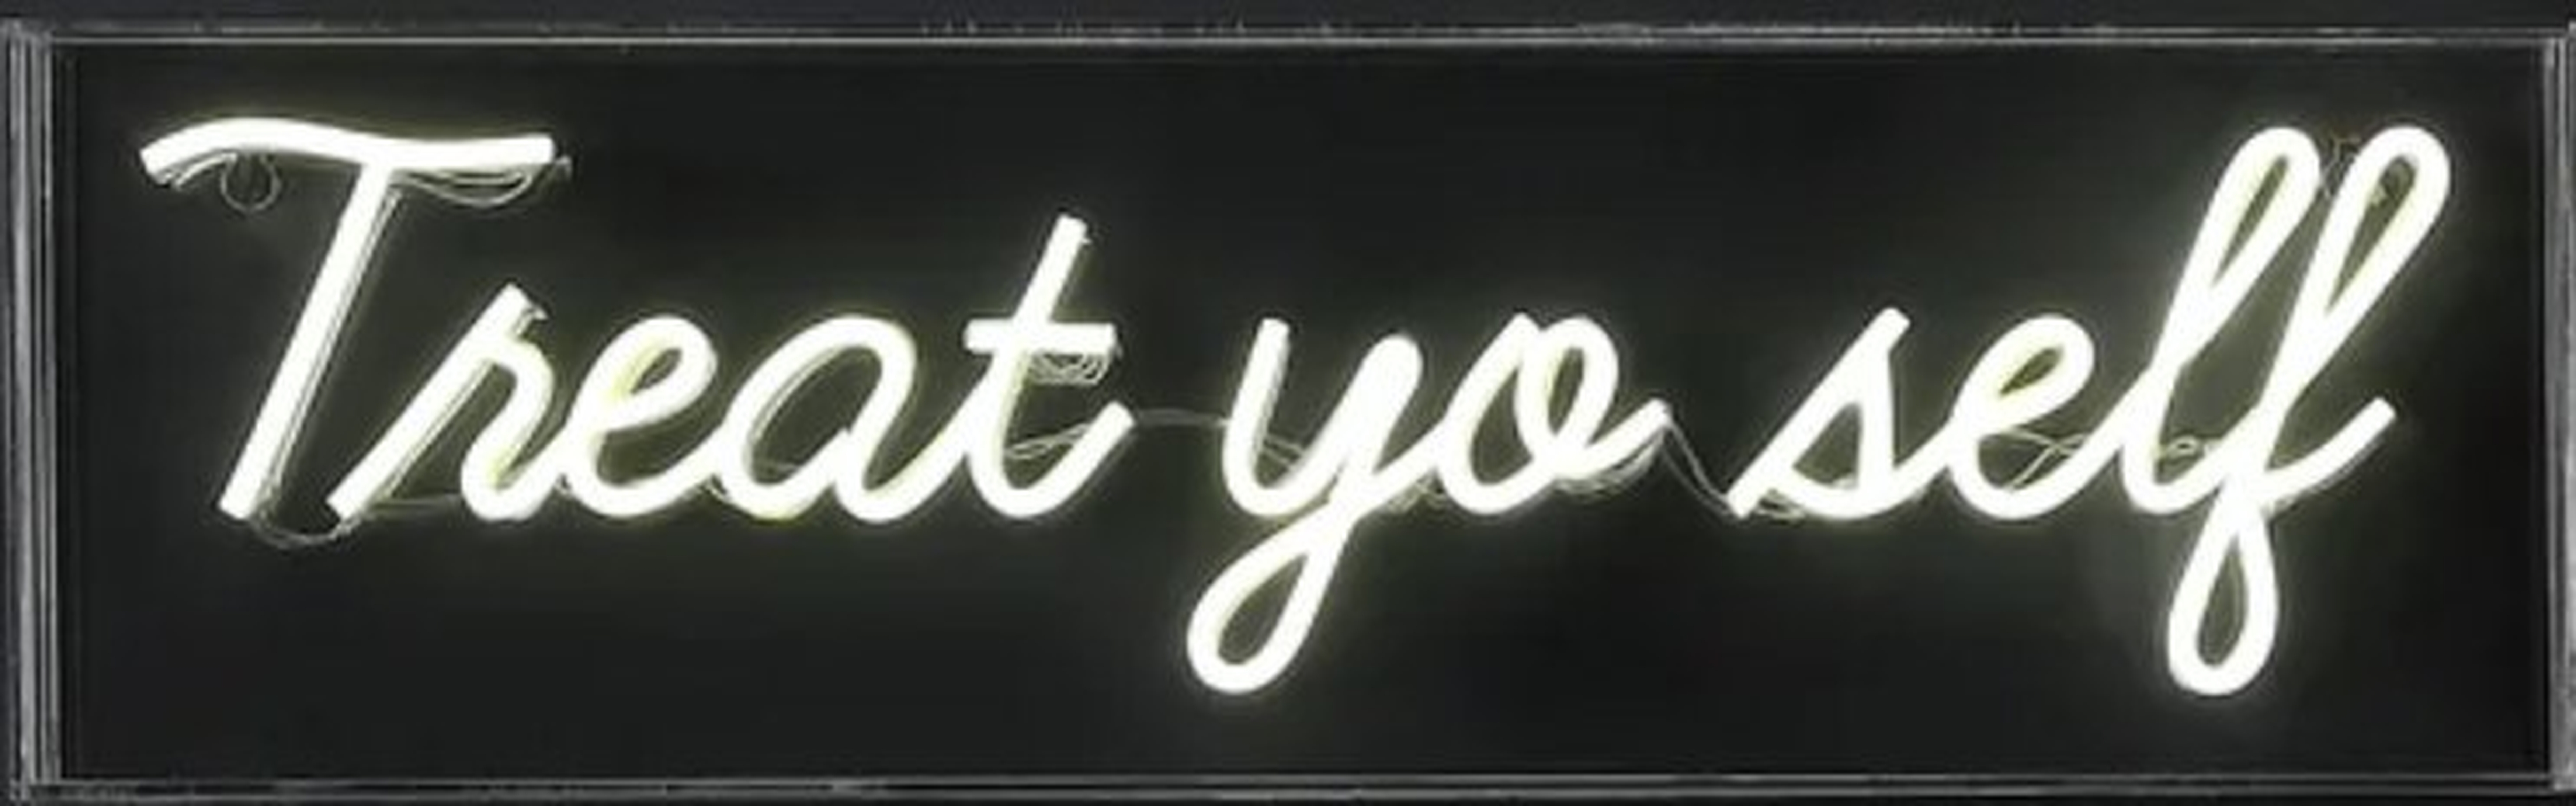 Treat Yo Self 6" LED Neon Sign - Wayfair